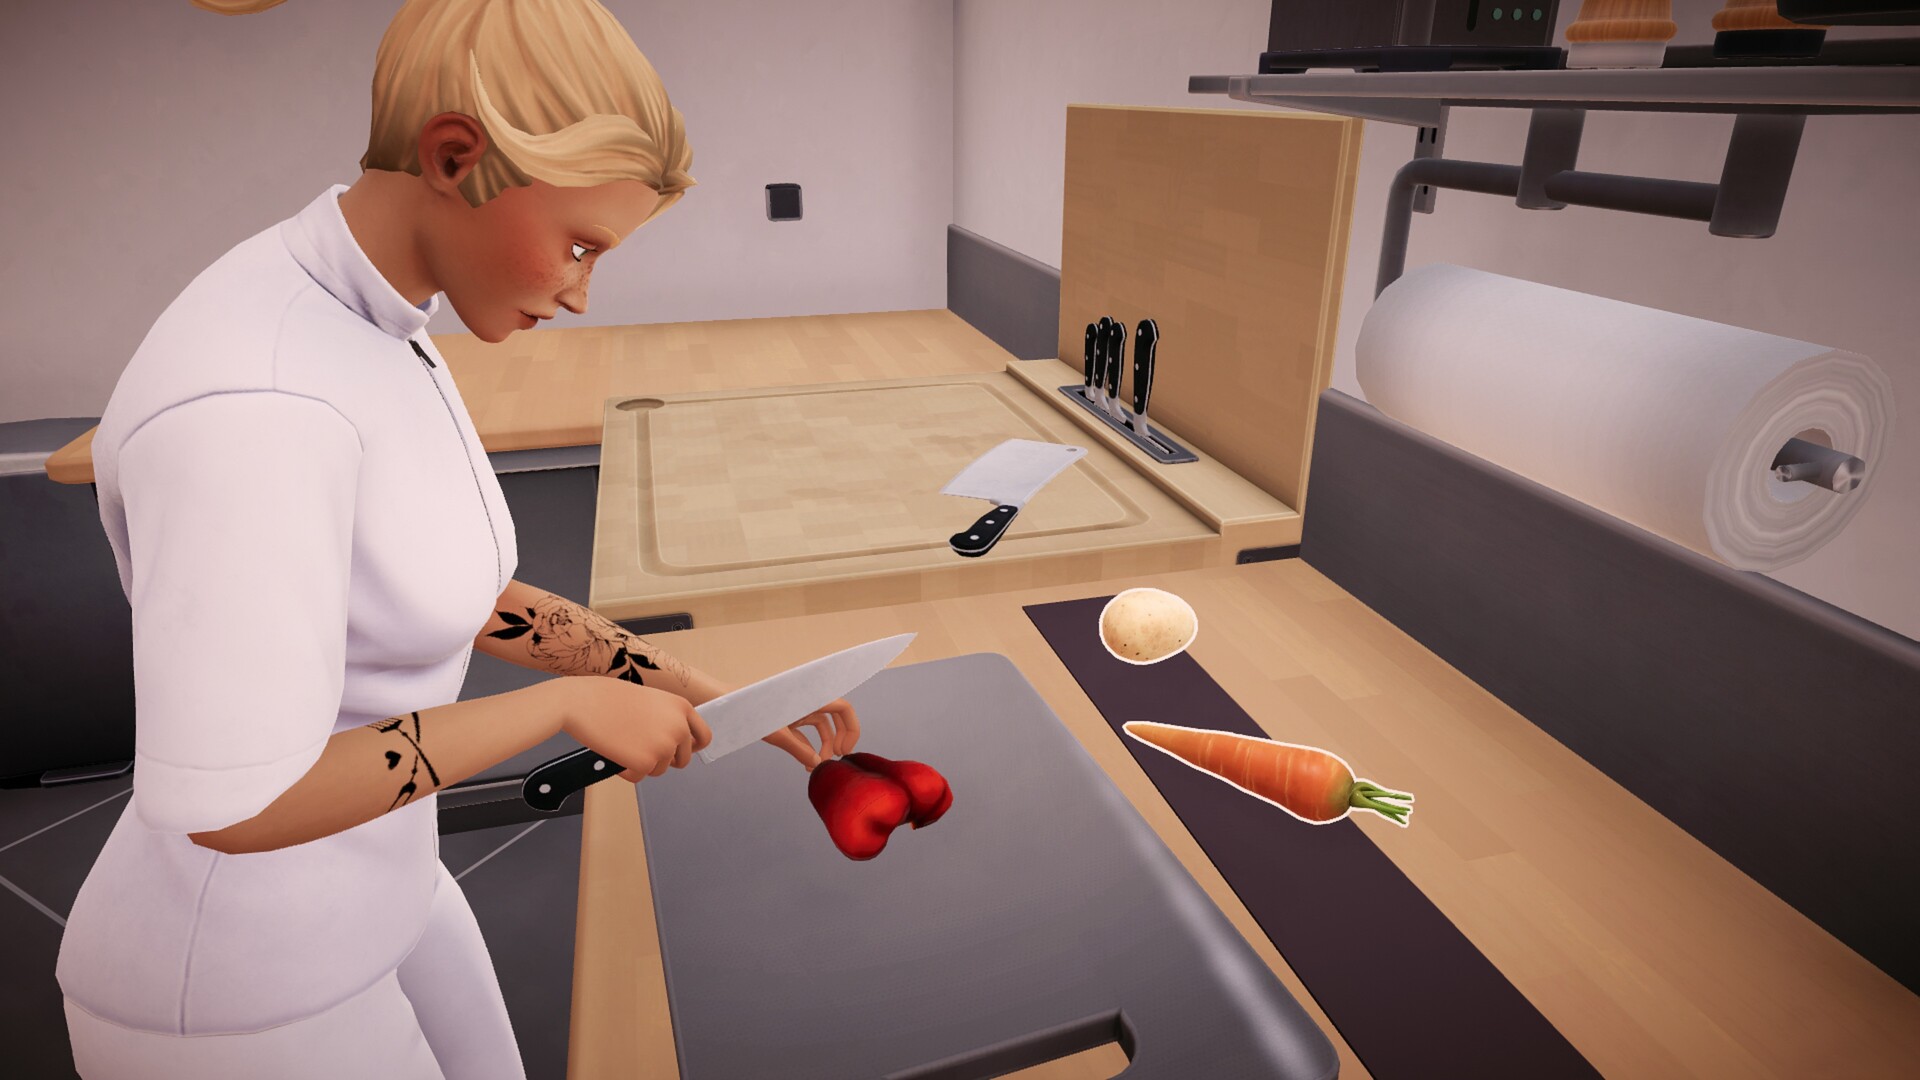 Chef Life: A Restaurant Simulator - PC [Steam Online Game Code